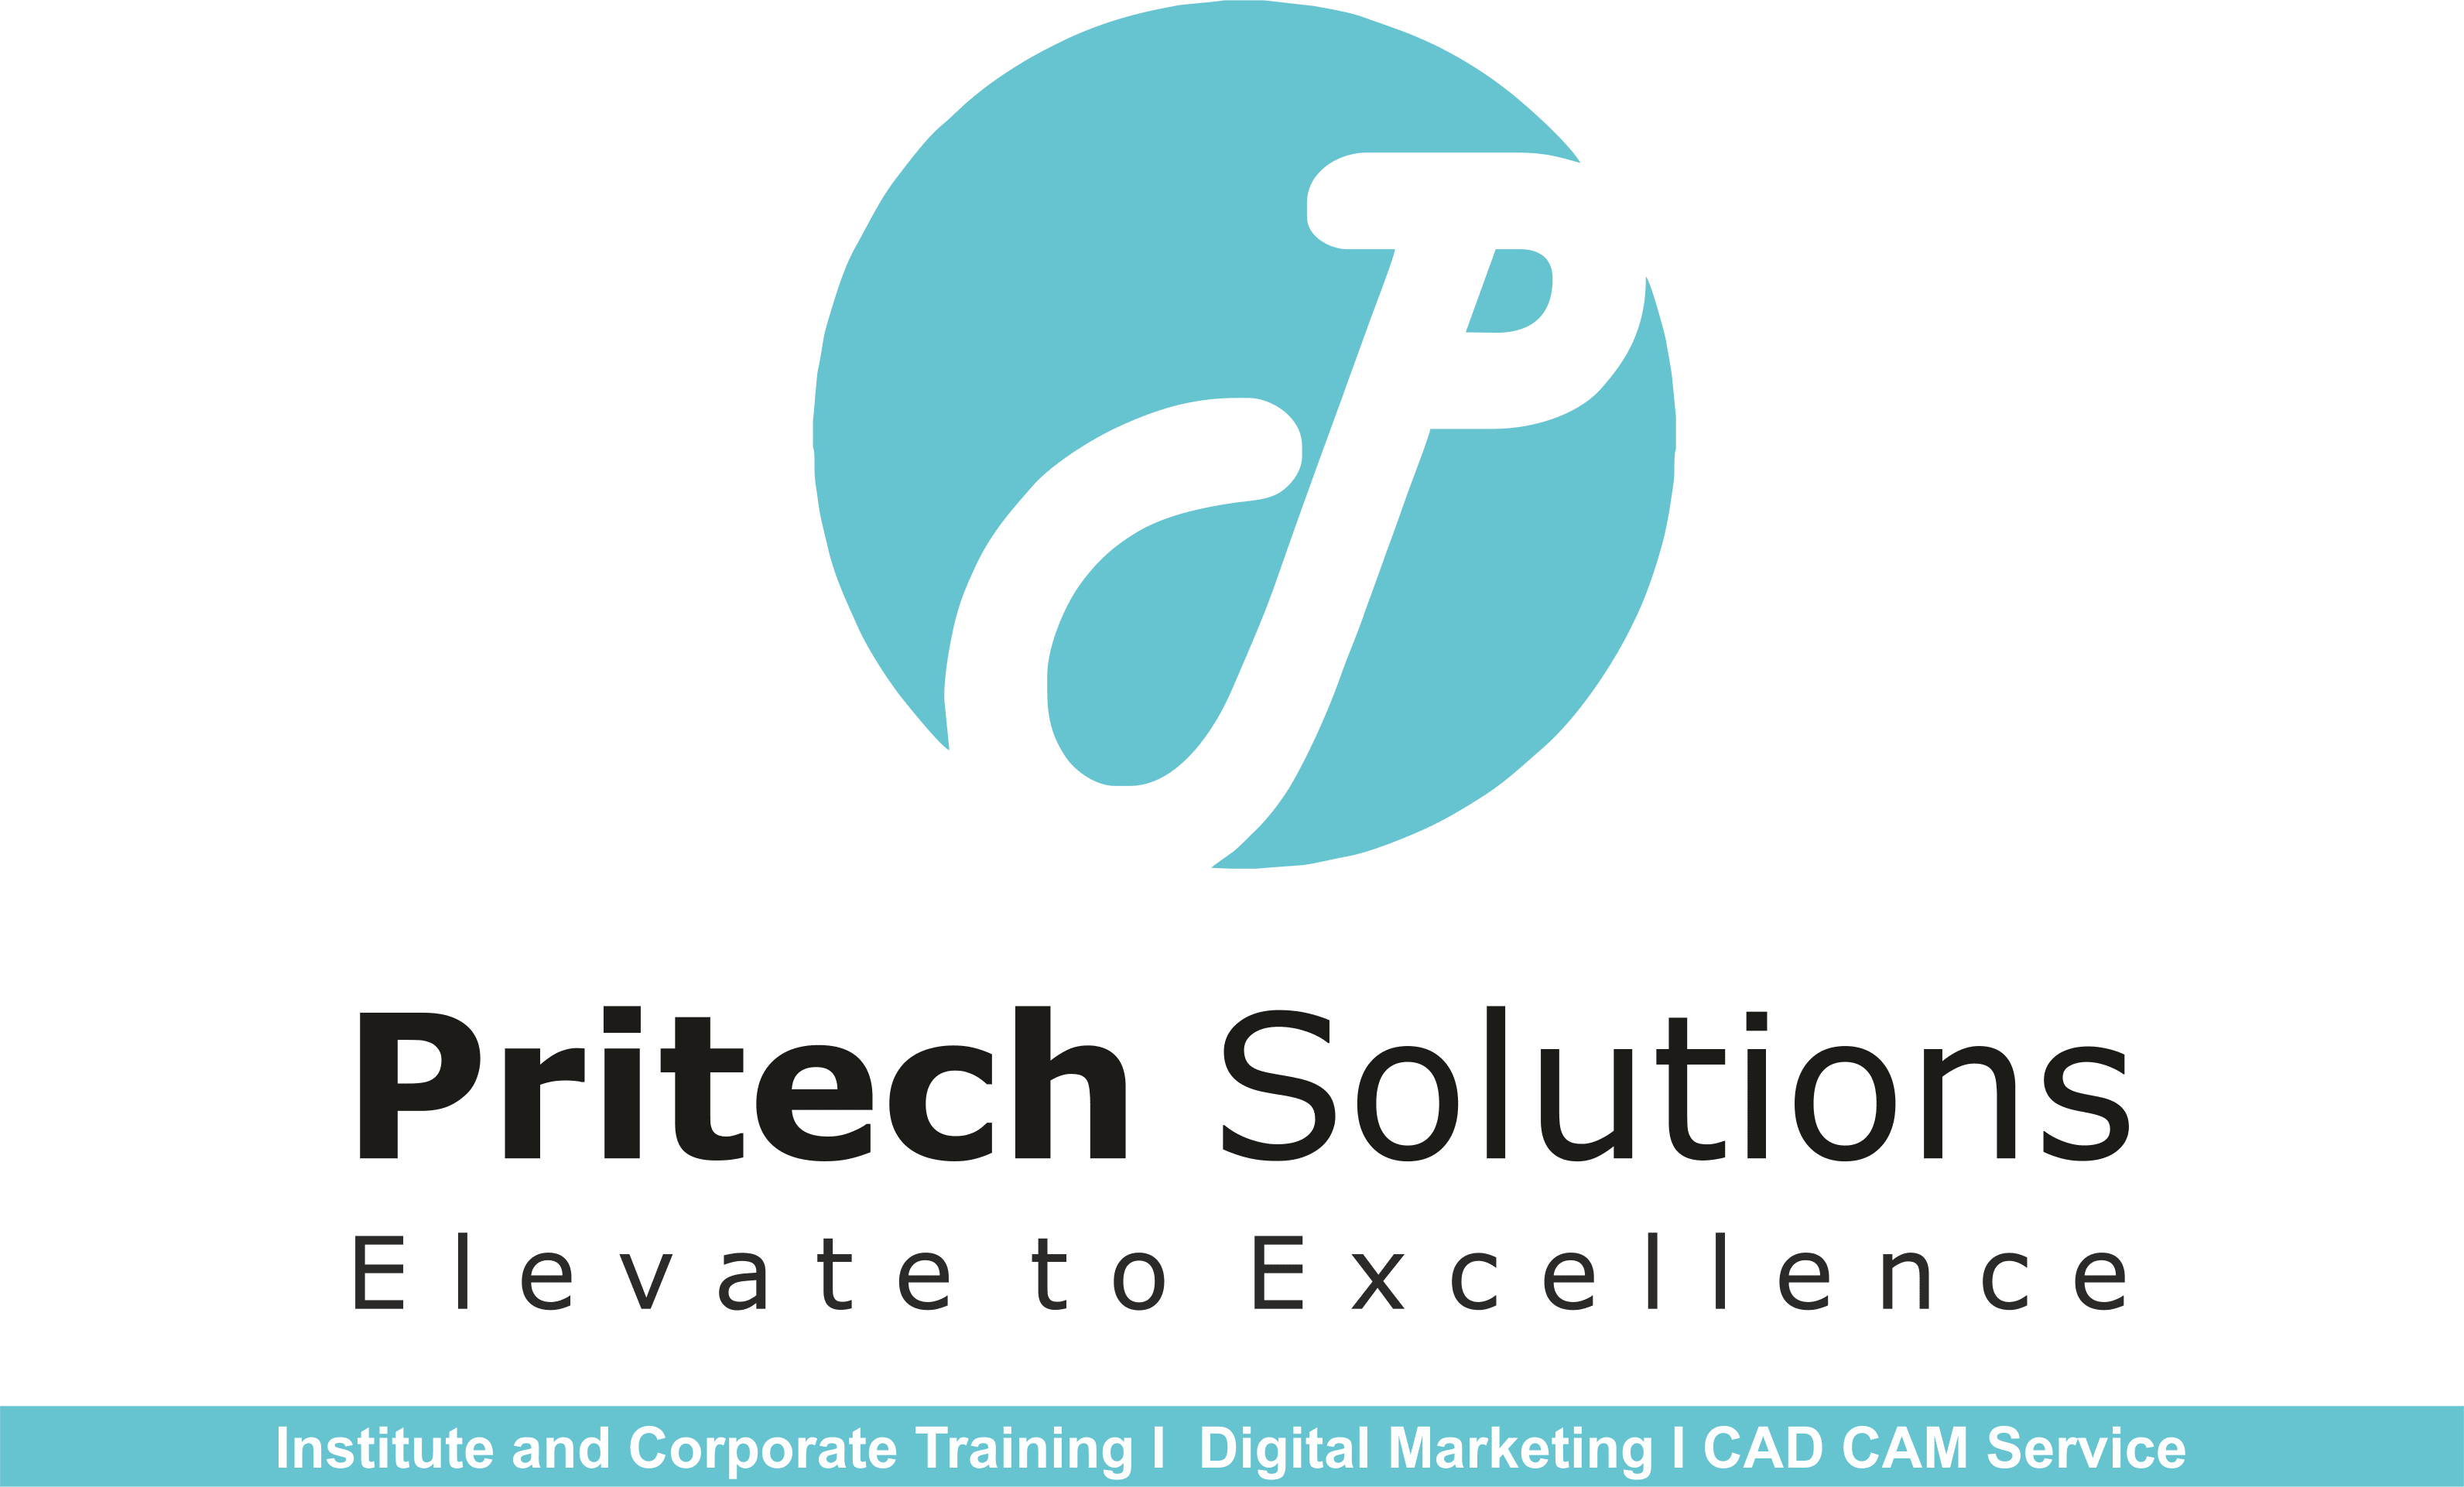 Pritech Solutions